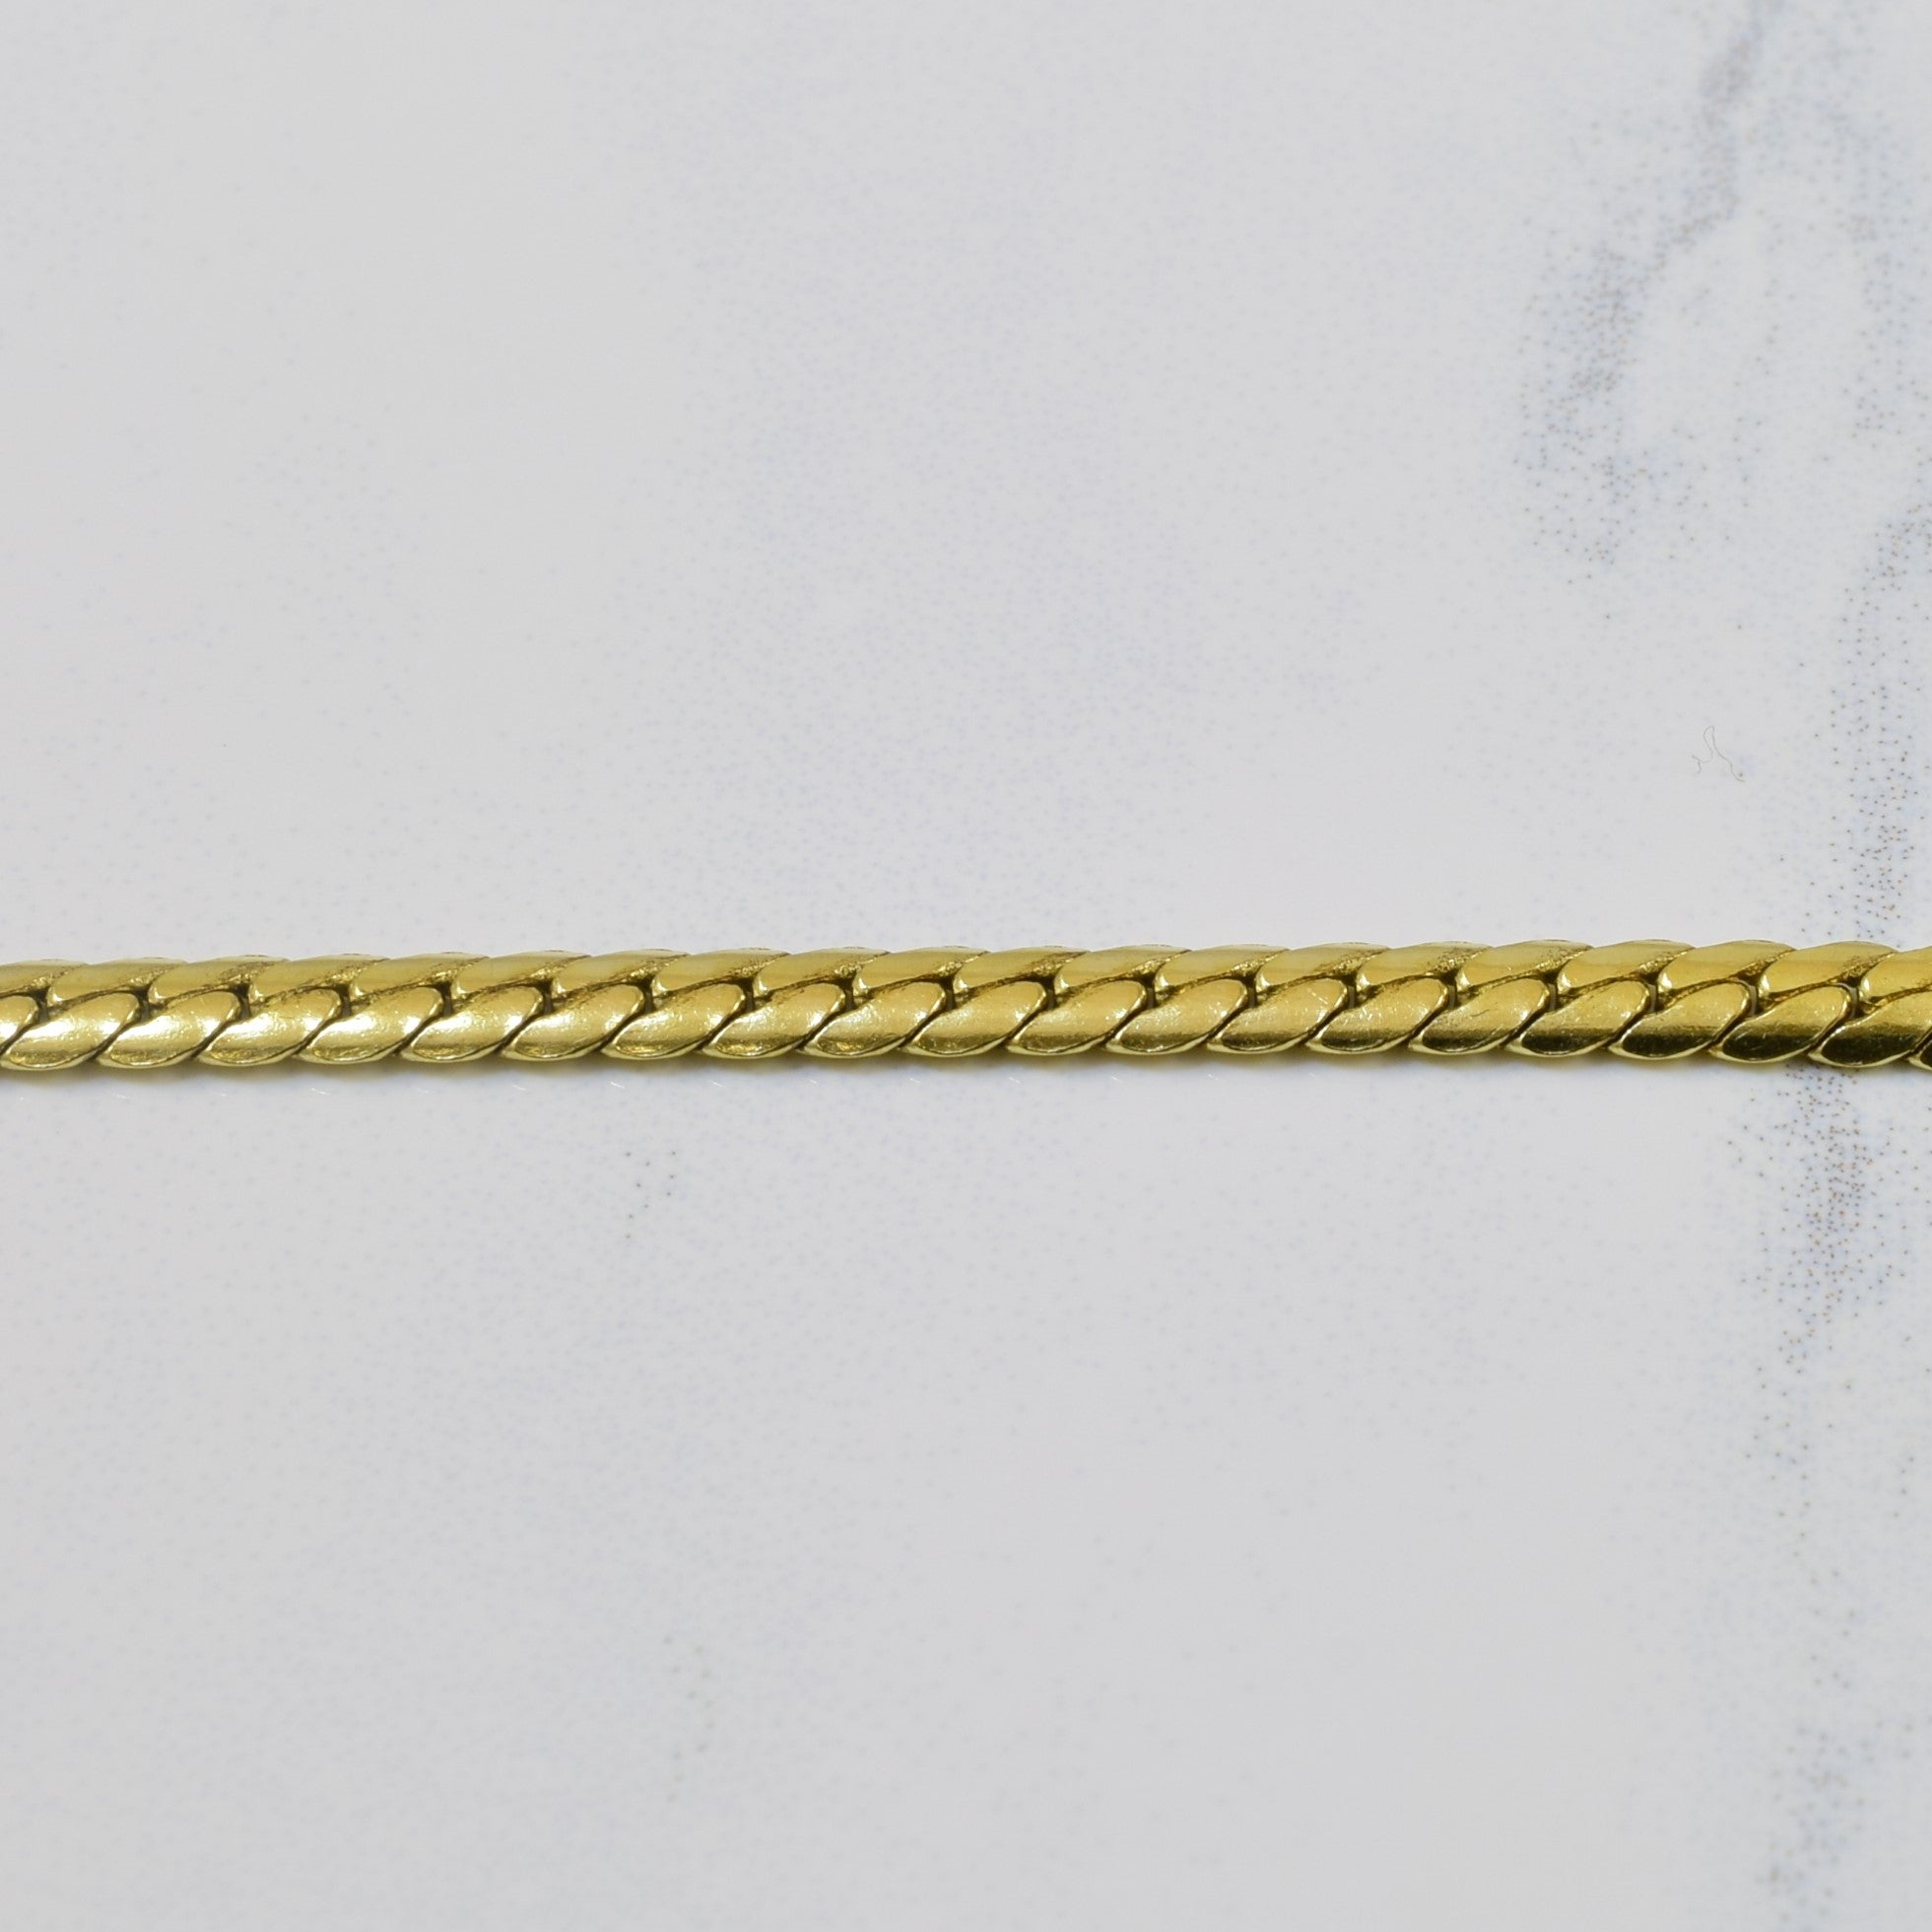 Pearl & Diamond Woven Chain Bracelet | 2.90ctw, 0.03ctw | 7.5